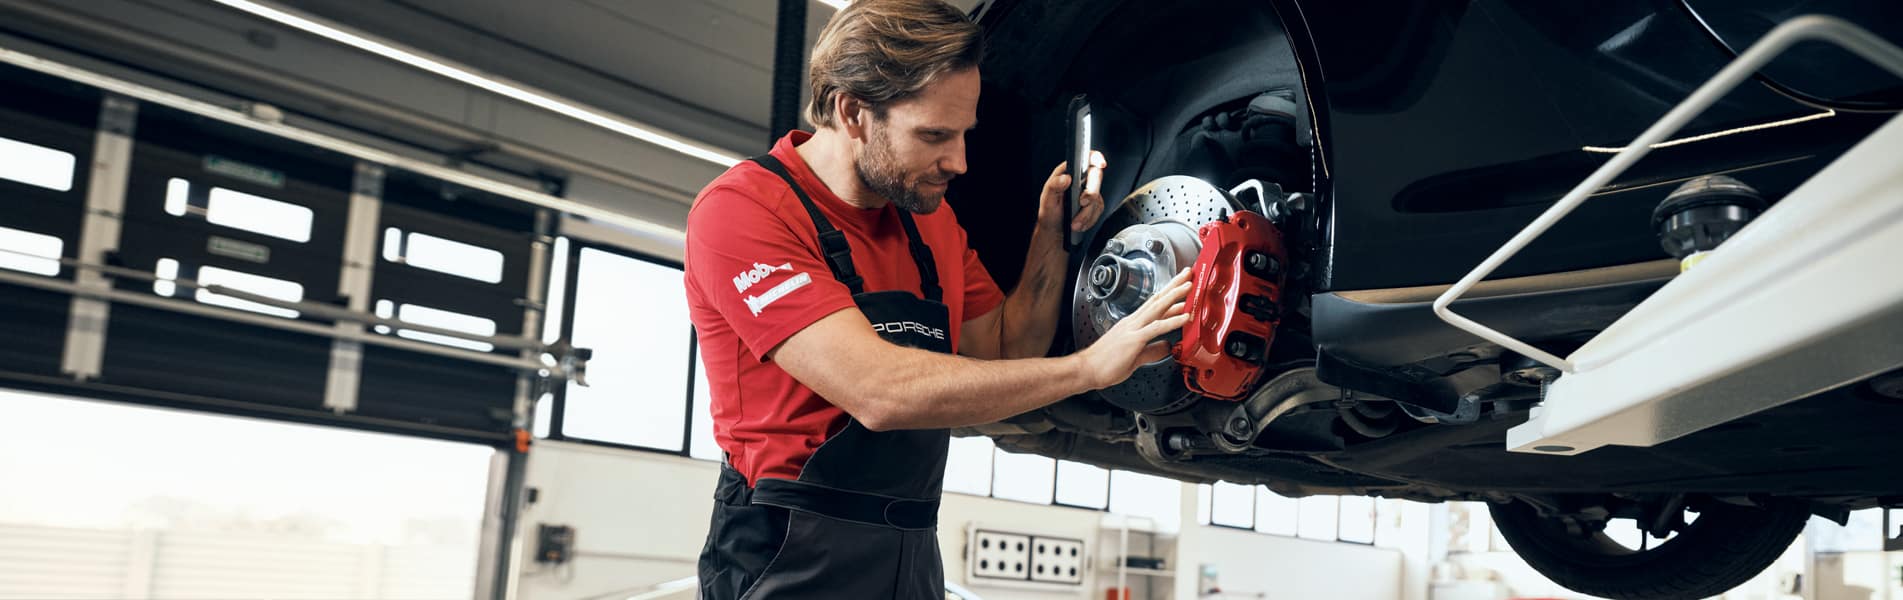 A certified Porsche technician working on a vehicle's brakes